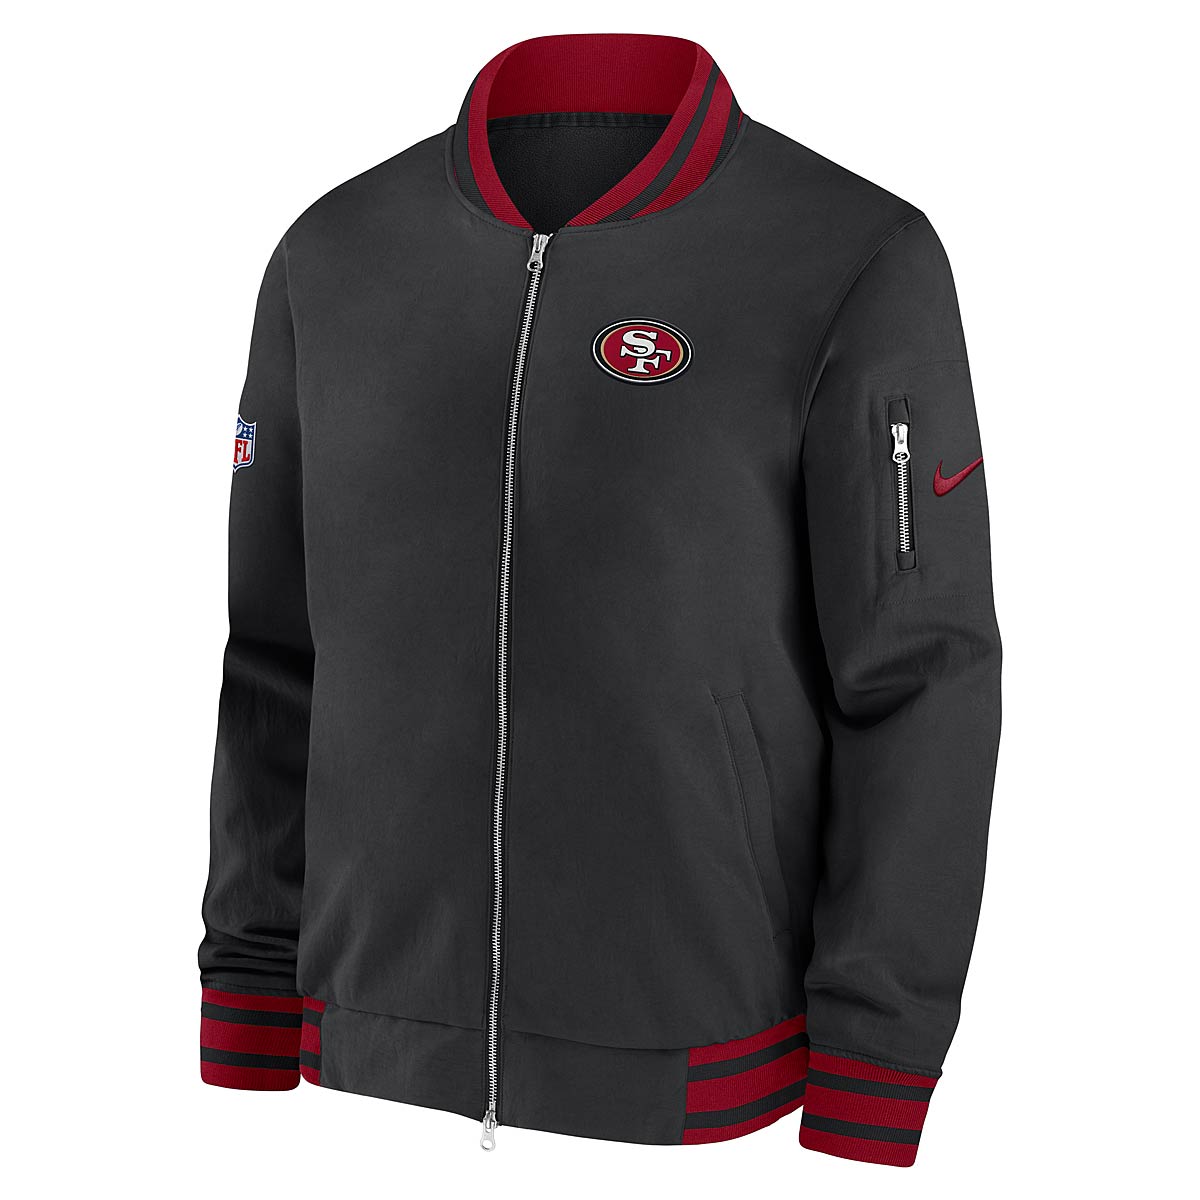 Buy NFL COACH BOMBER JACKET SAN FRANCISCO 49ERS for EUR 97.90 on KICKZ.com!